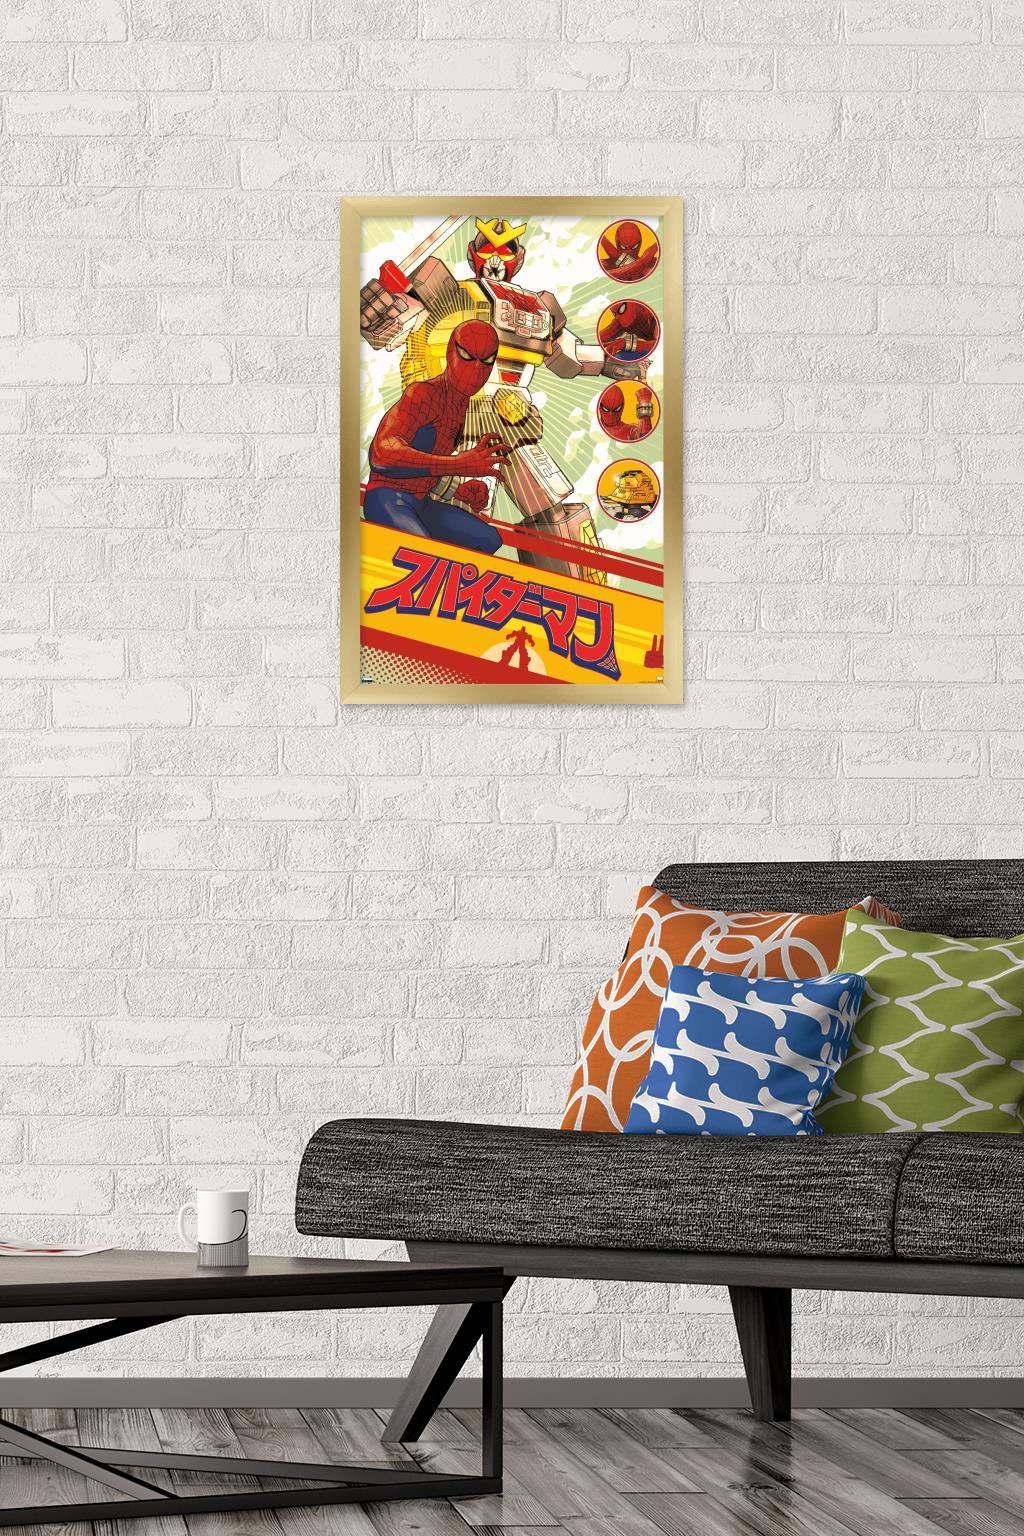 Marvel Comics TV - Japanese Spider-Man - Leopardon Sword Wall Poster, 14.725" x 22.375", Framed - image 2 of 5